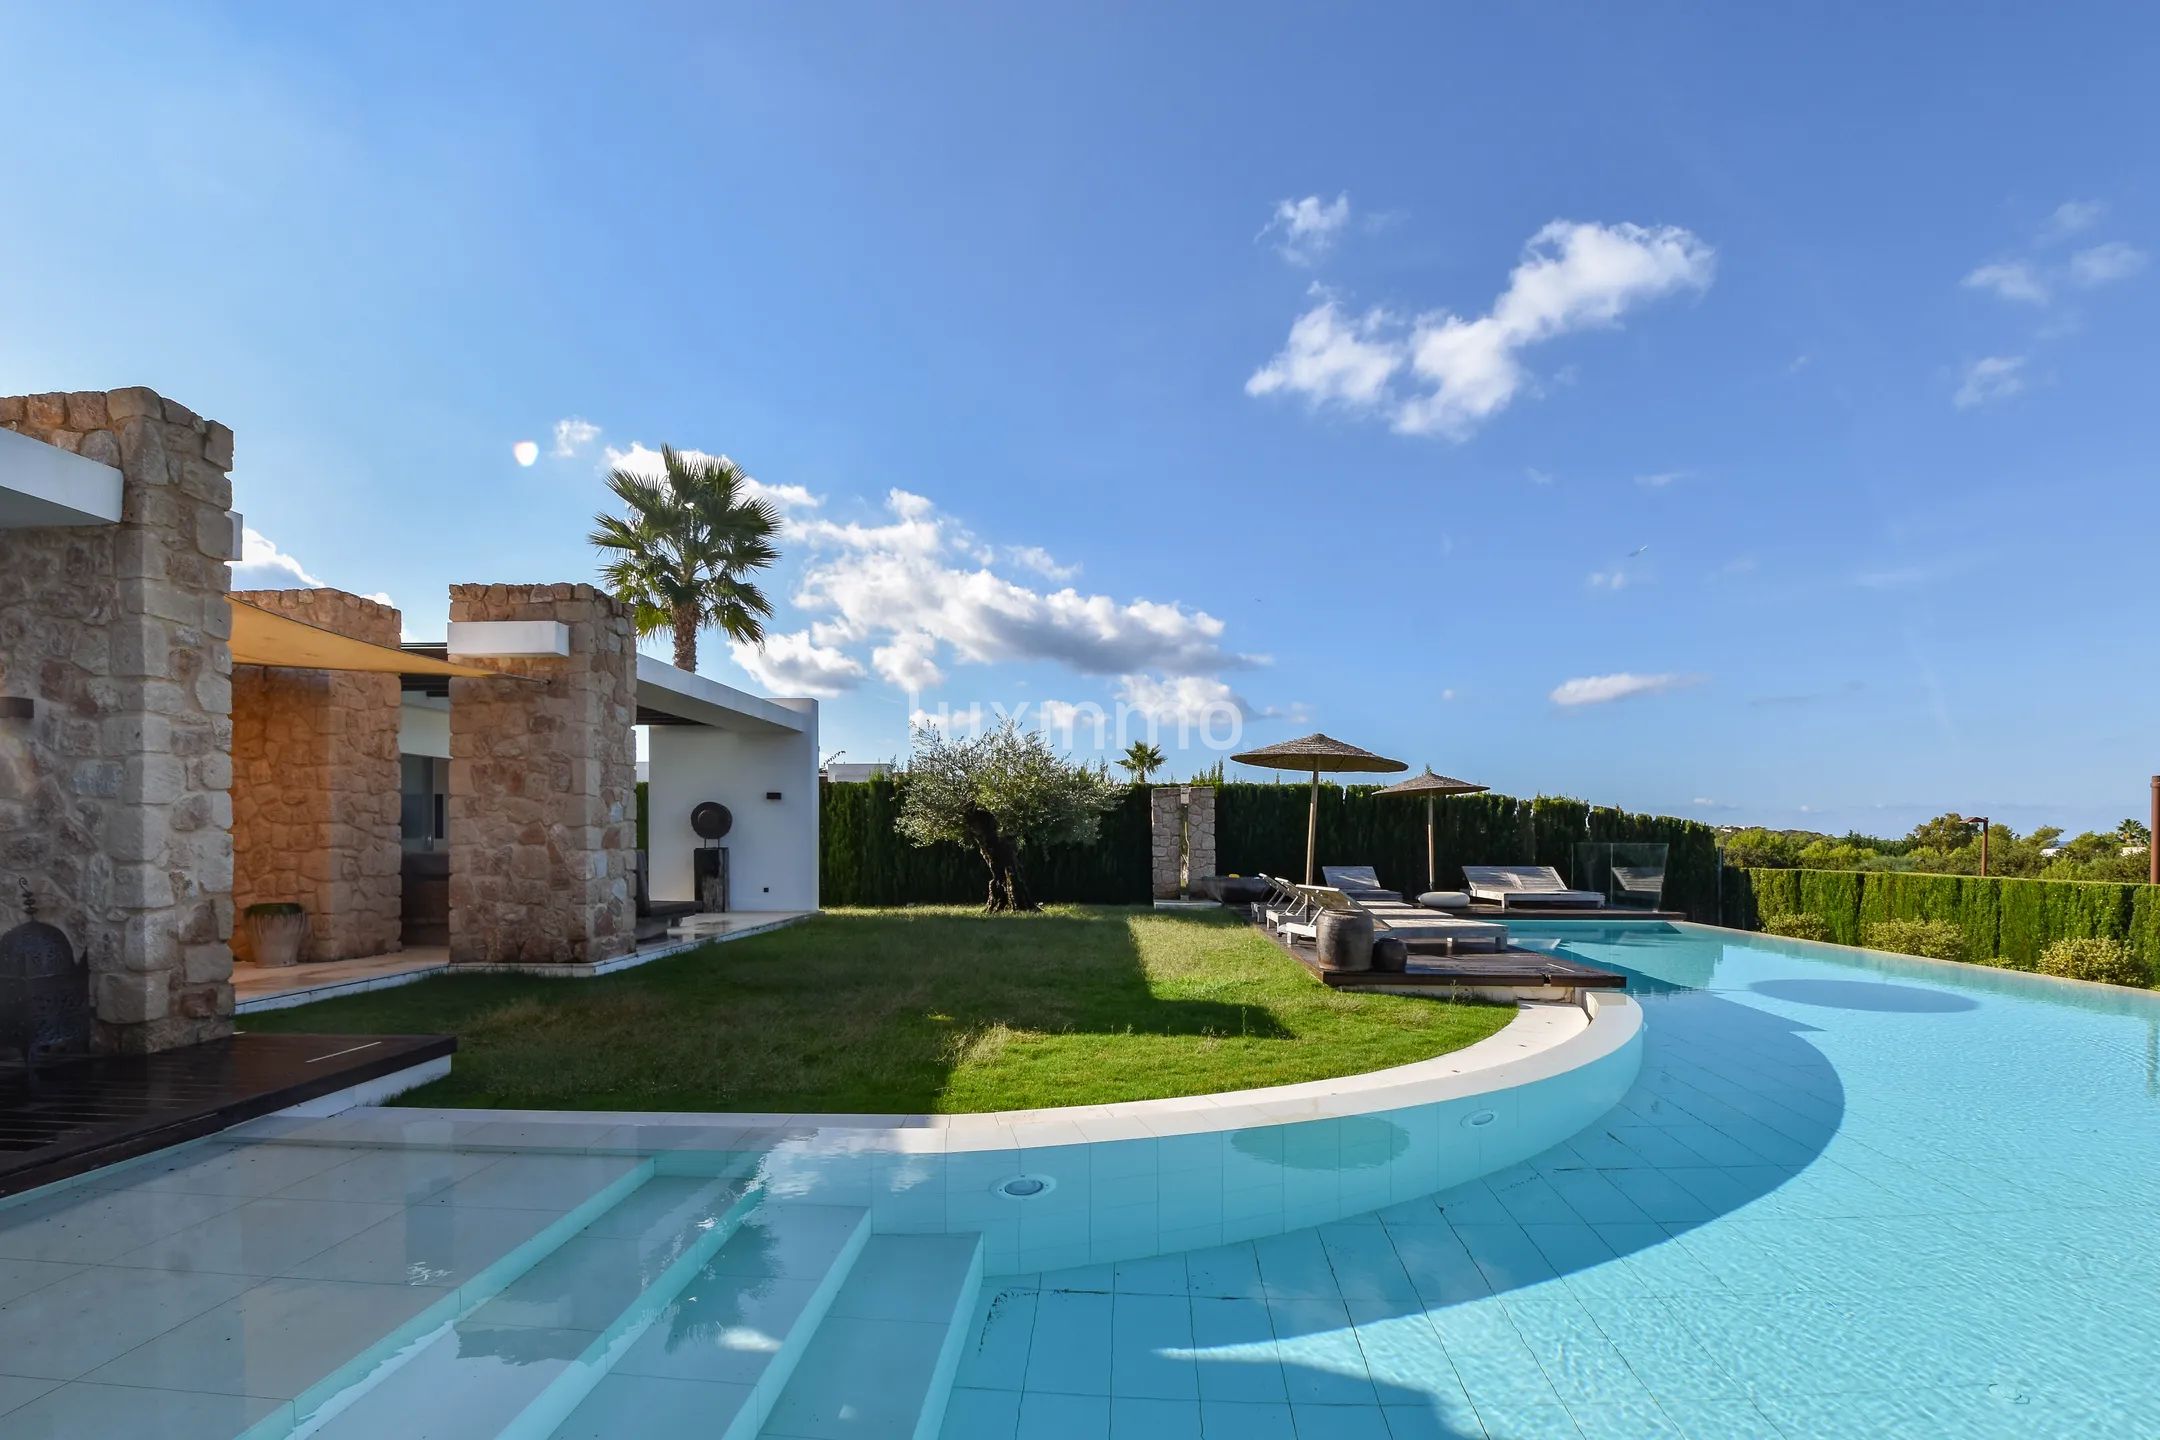 Villa in a luxury urbanization at Cala Conta